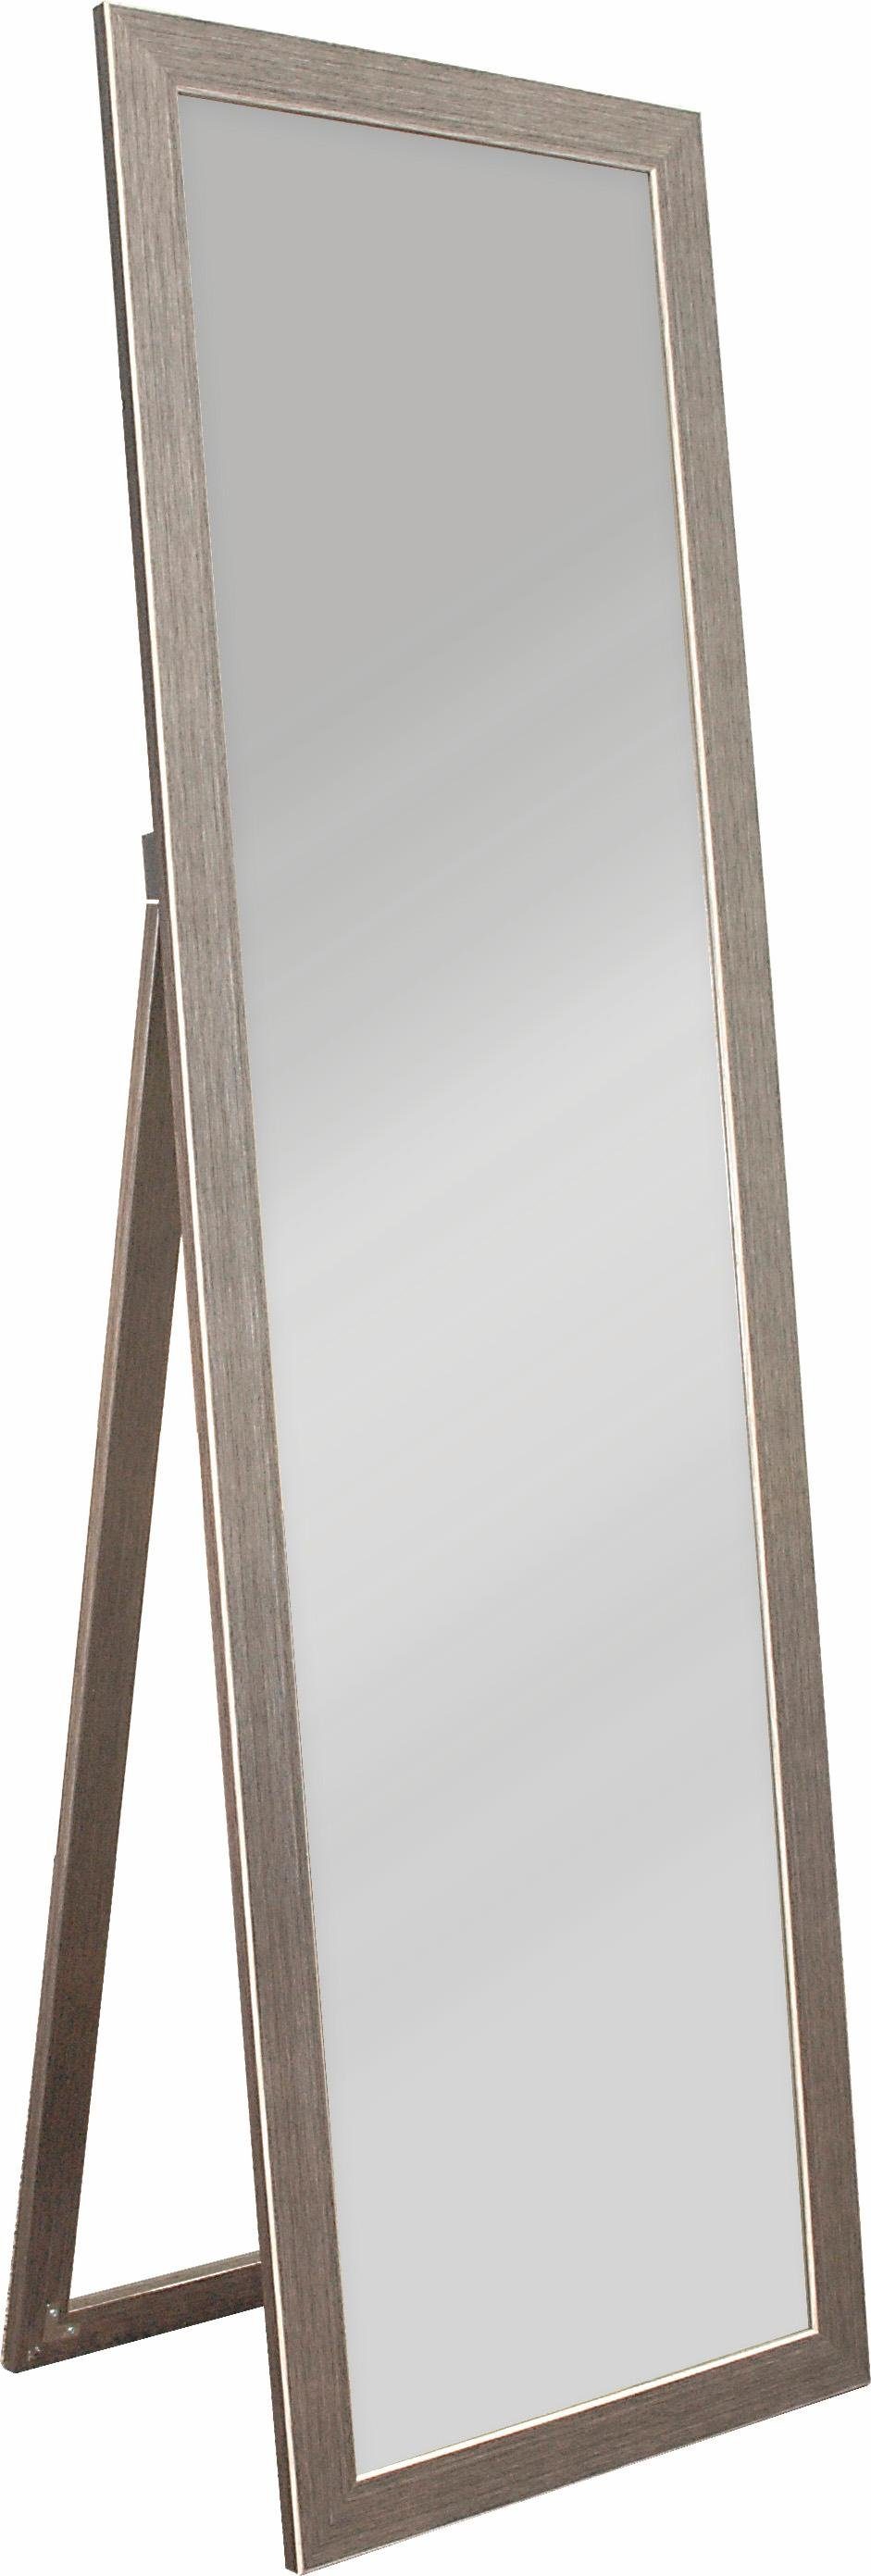 Klik solo lippen Home affaire Sierspiegel Mirror Raahe Verticale spiegel (1 stuk) makkelijk  gevonden | OTTO